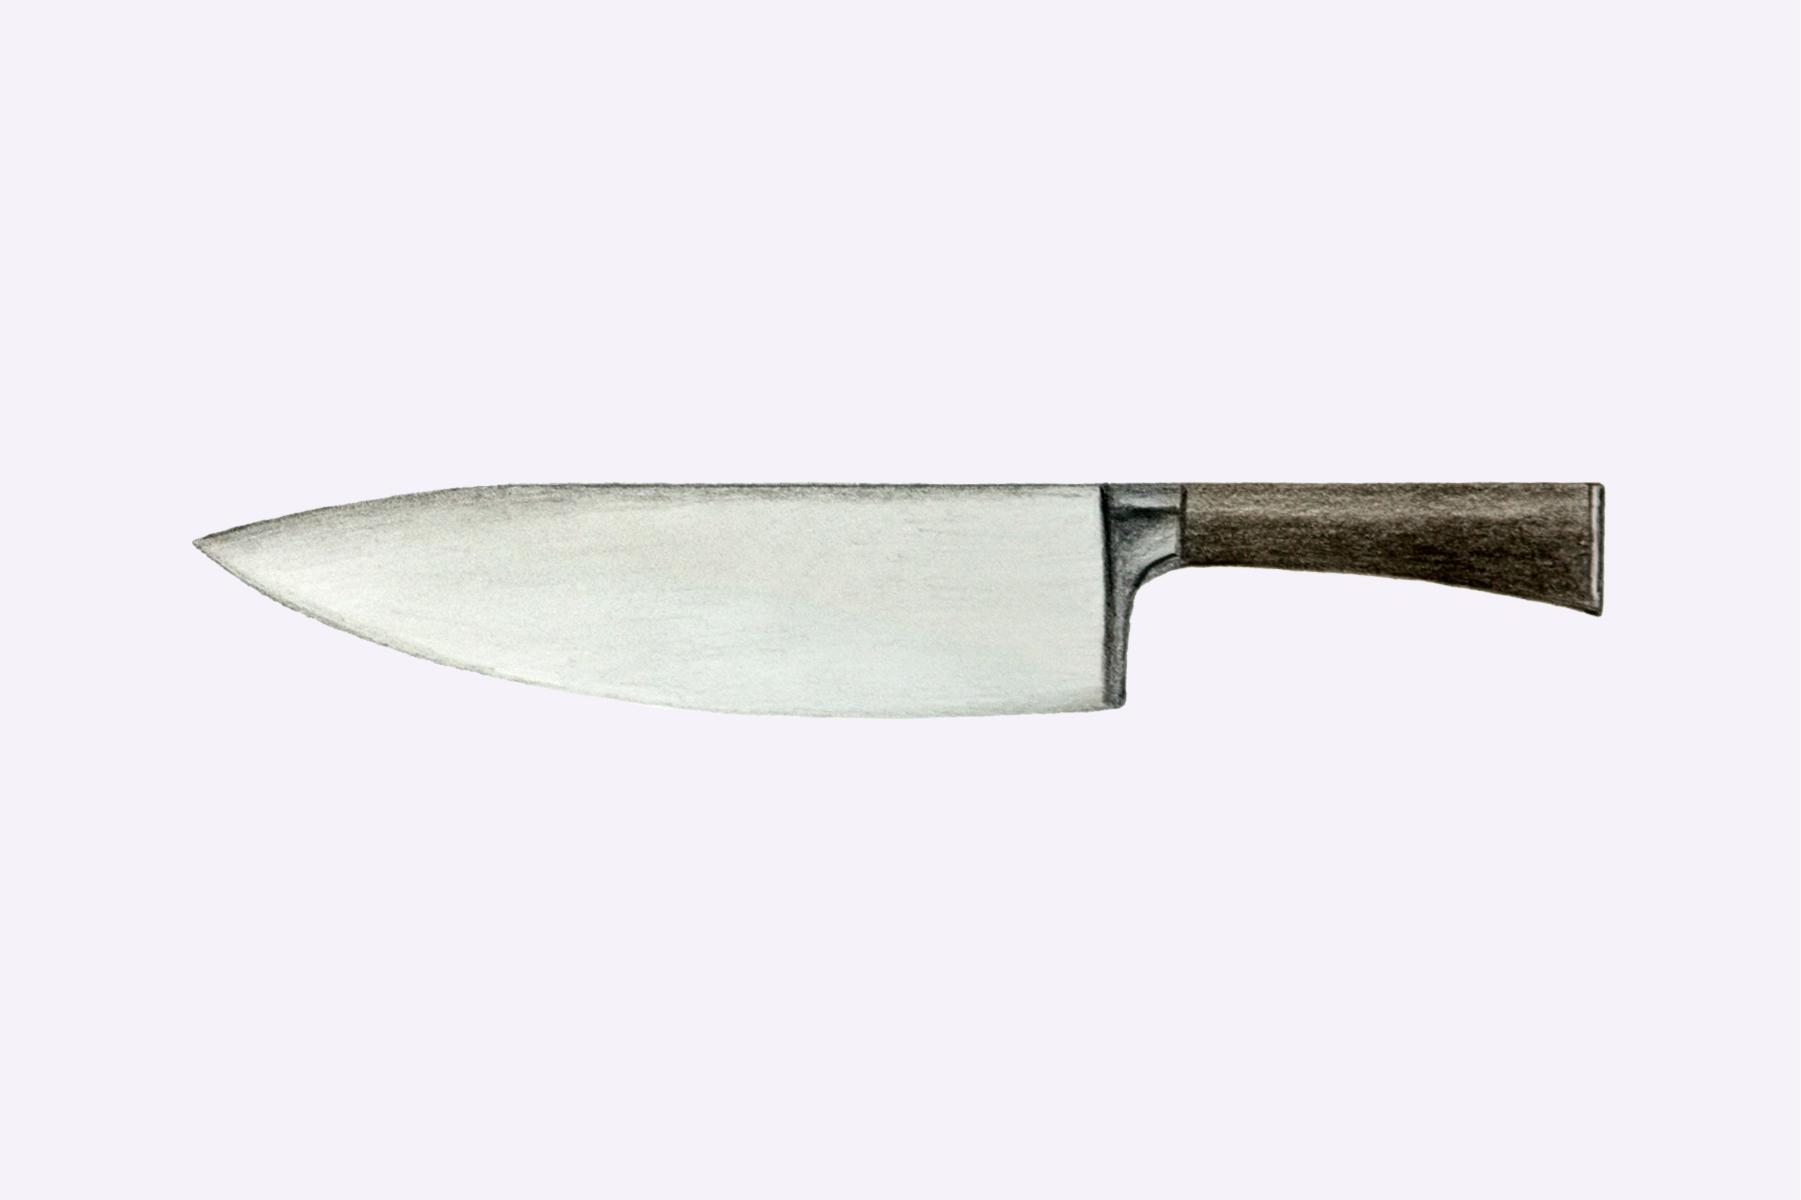 Basic Knife Skills: Get Your Onion On!